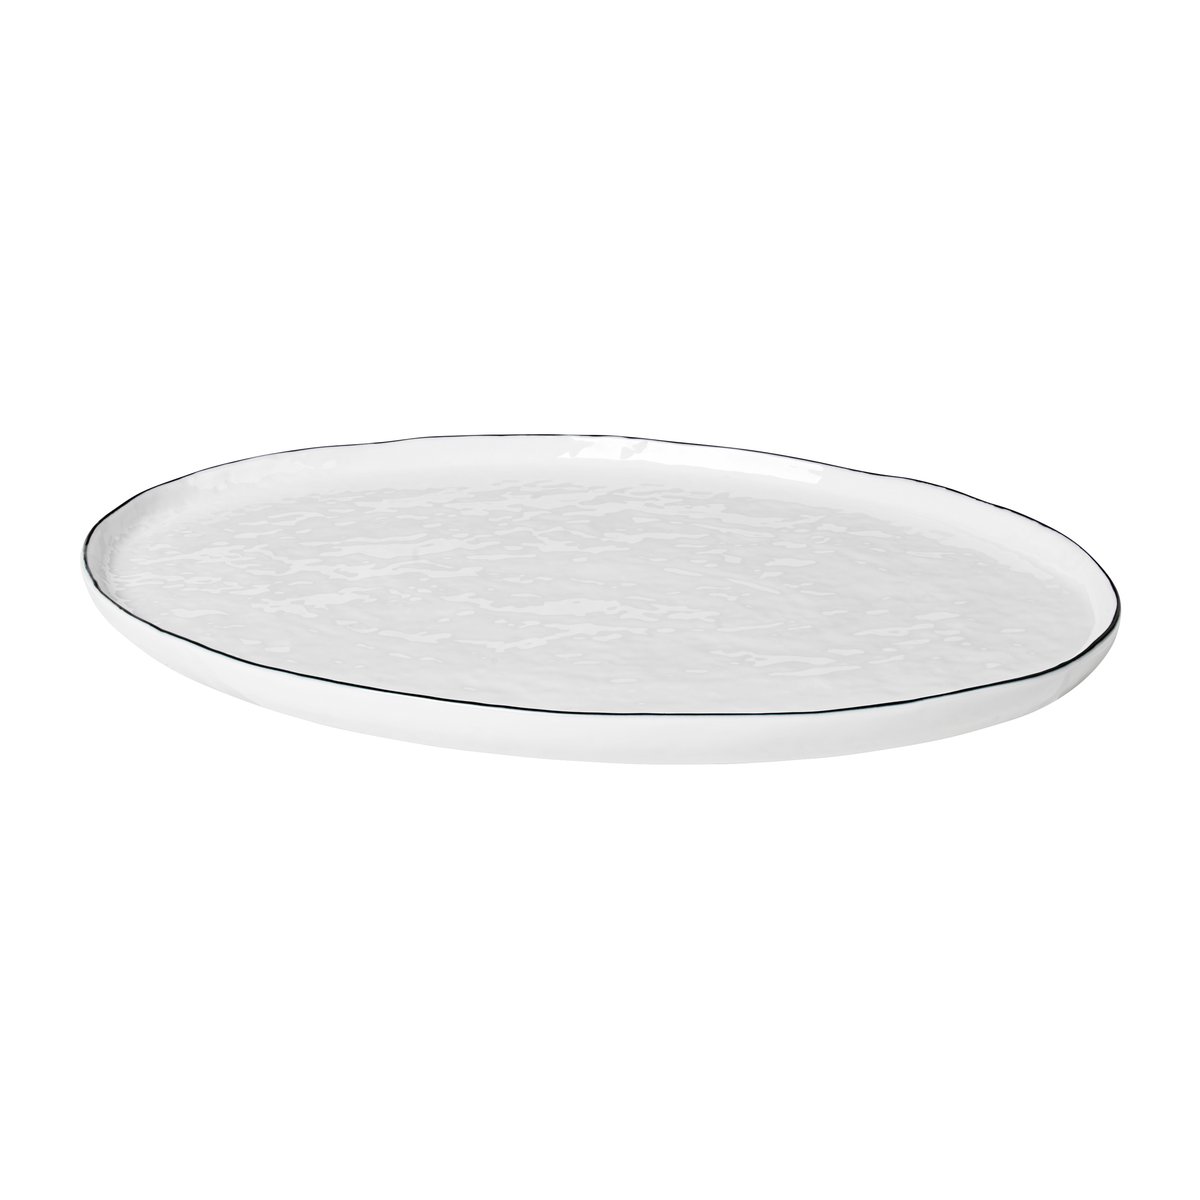 Broste Copenhagen Salt oval tallerken 26,5x38,5 cm
​